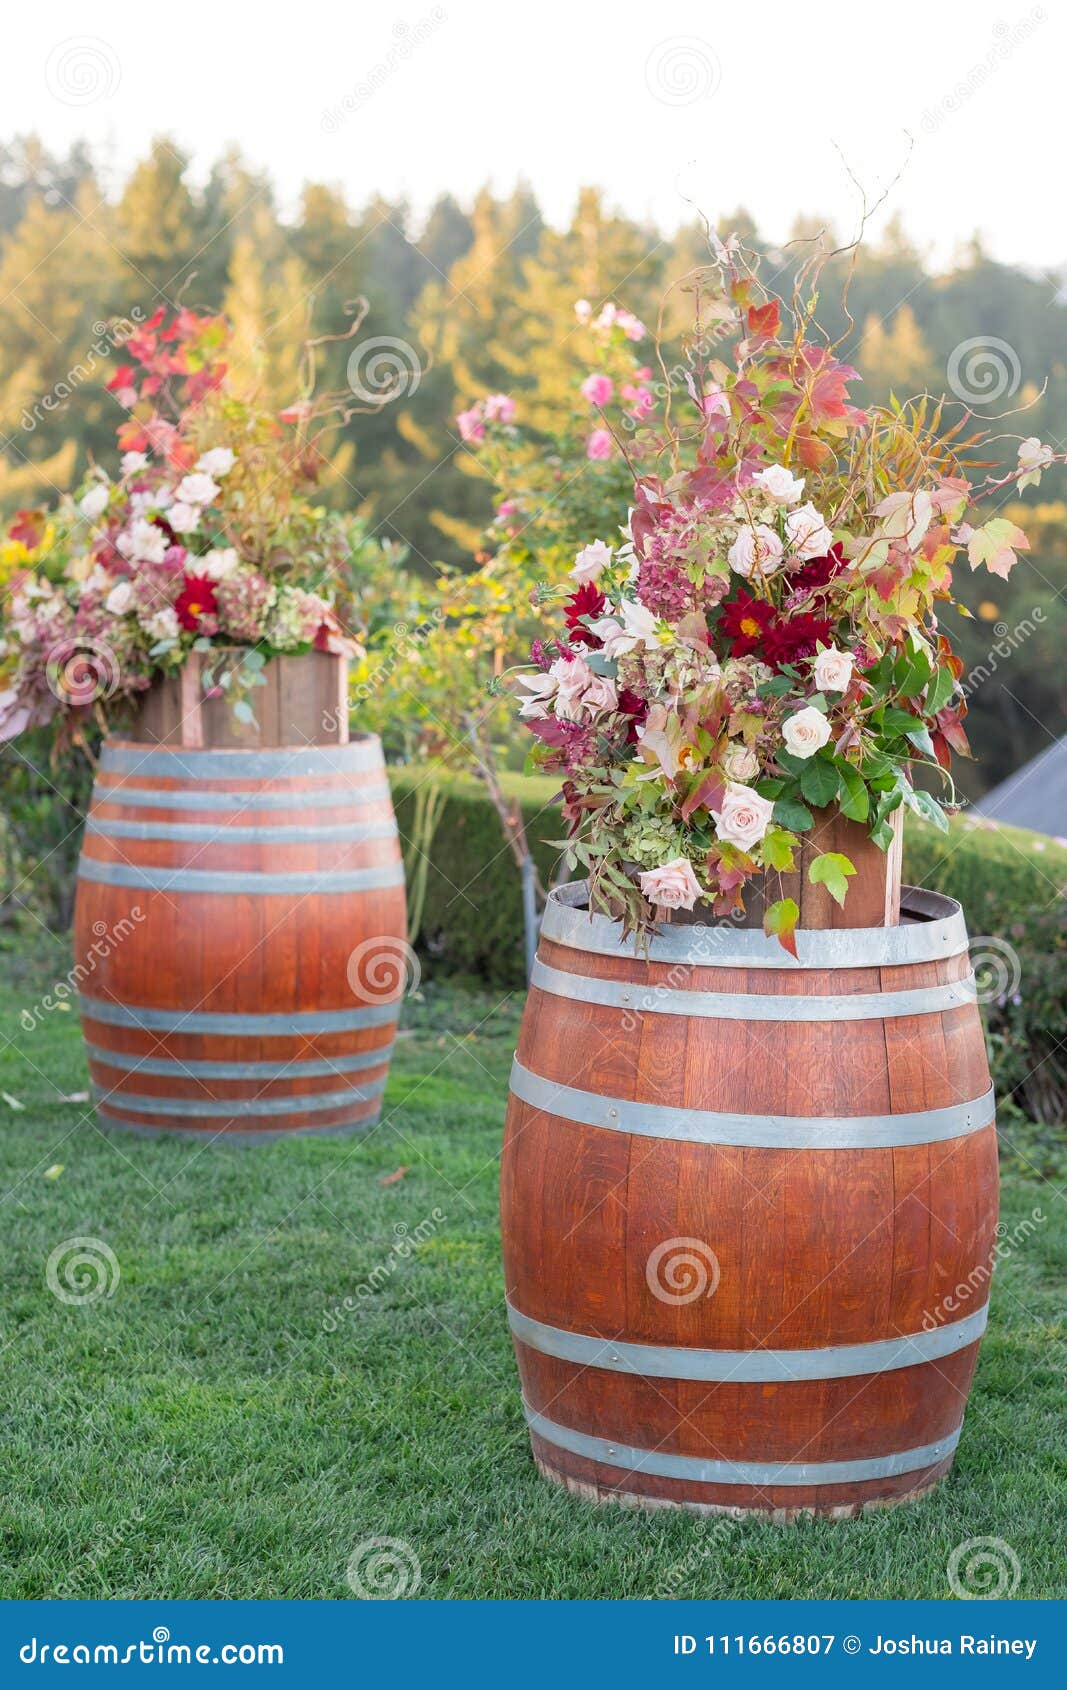 Flowers On Wine Barrel At Wedding Ceremony Stock Image Image Of